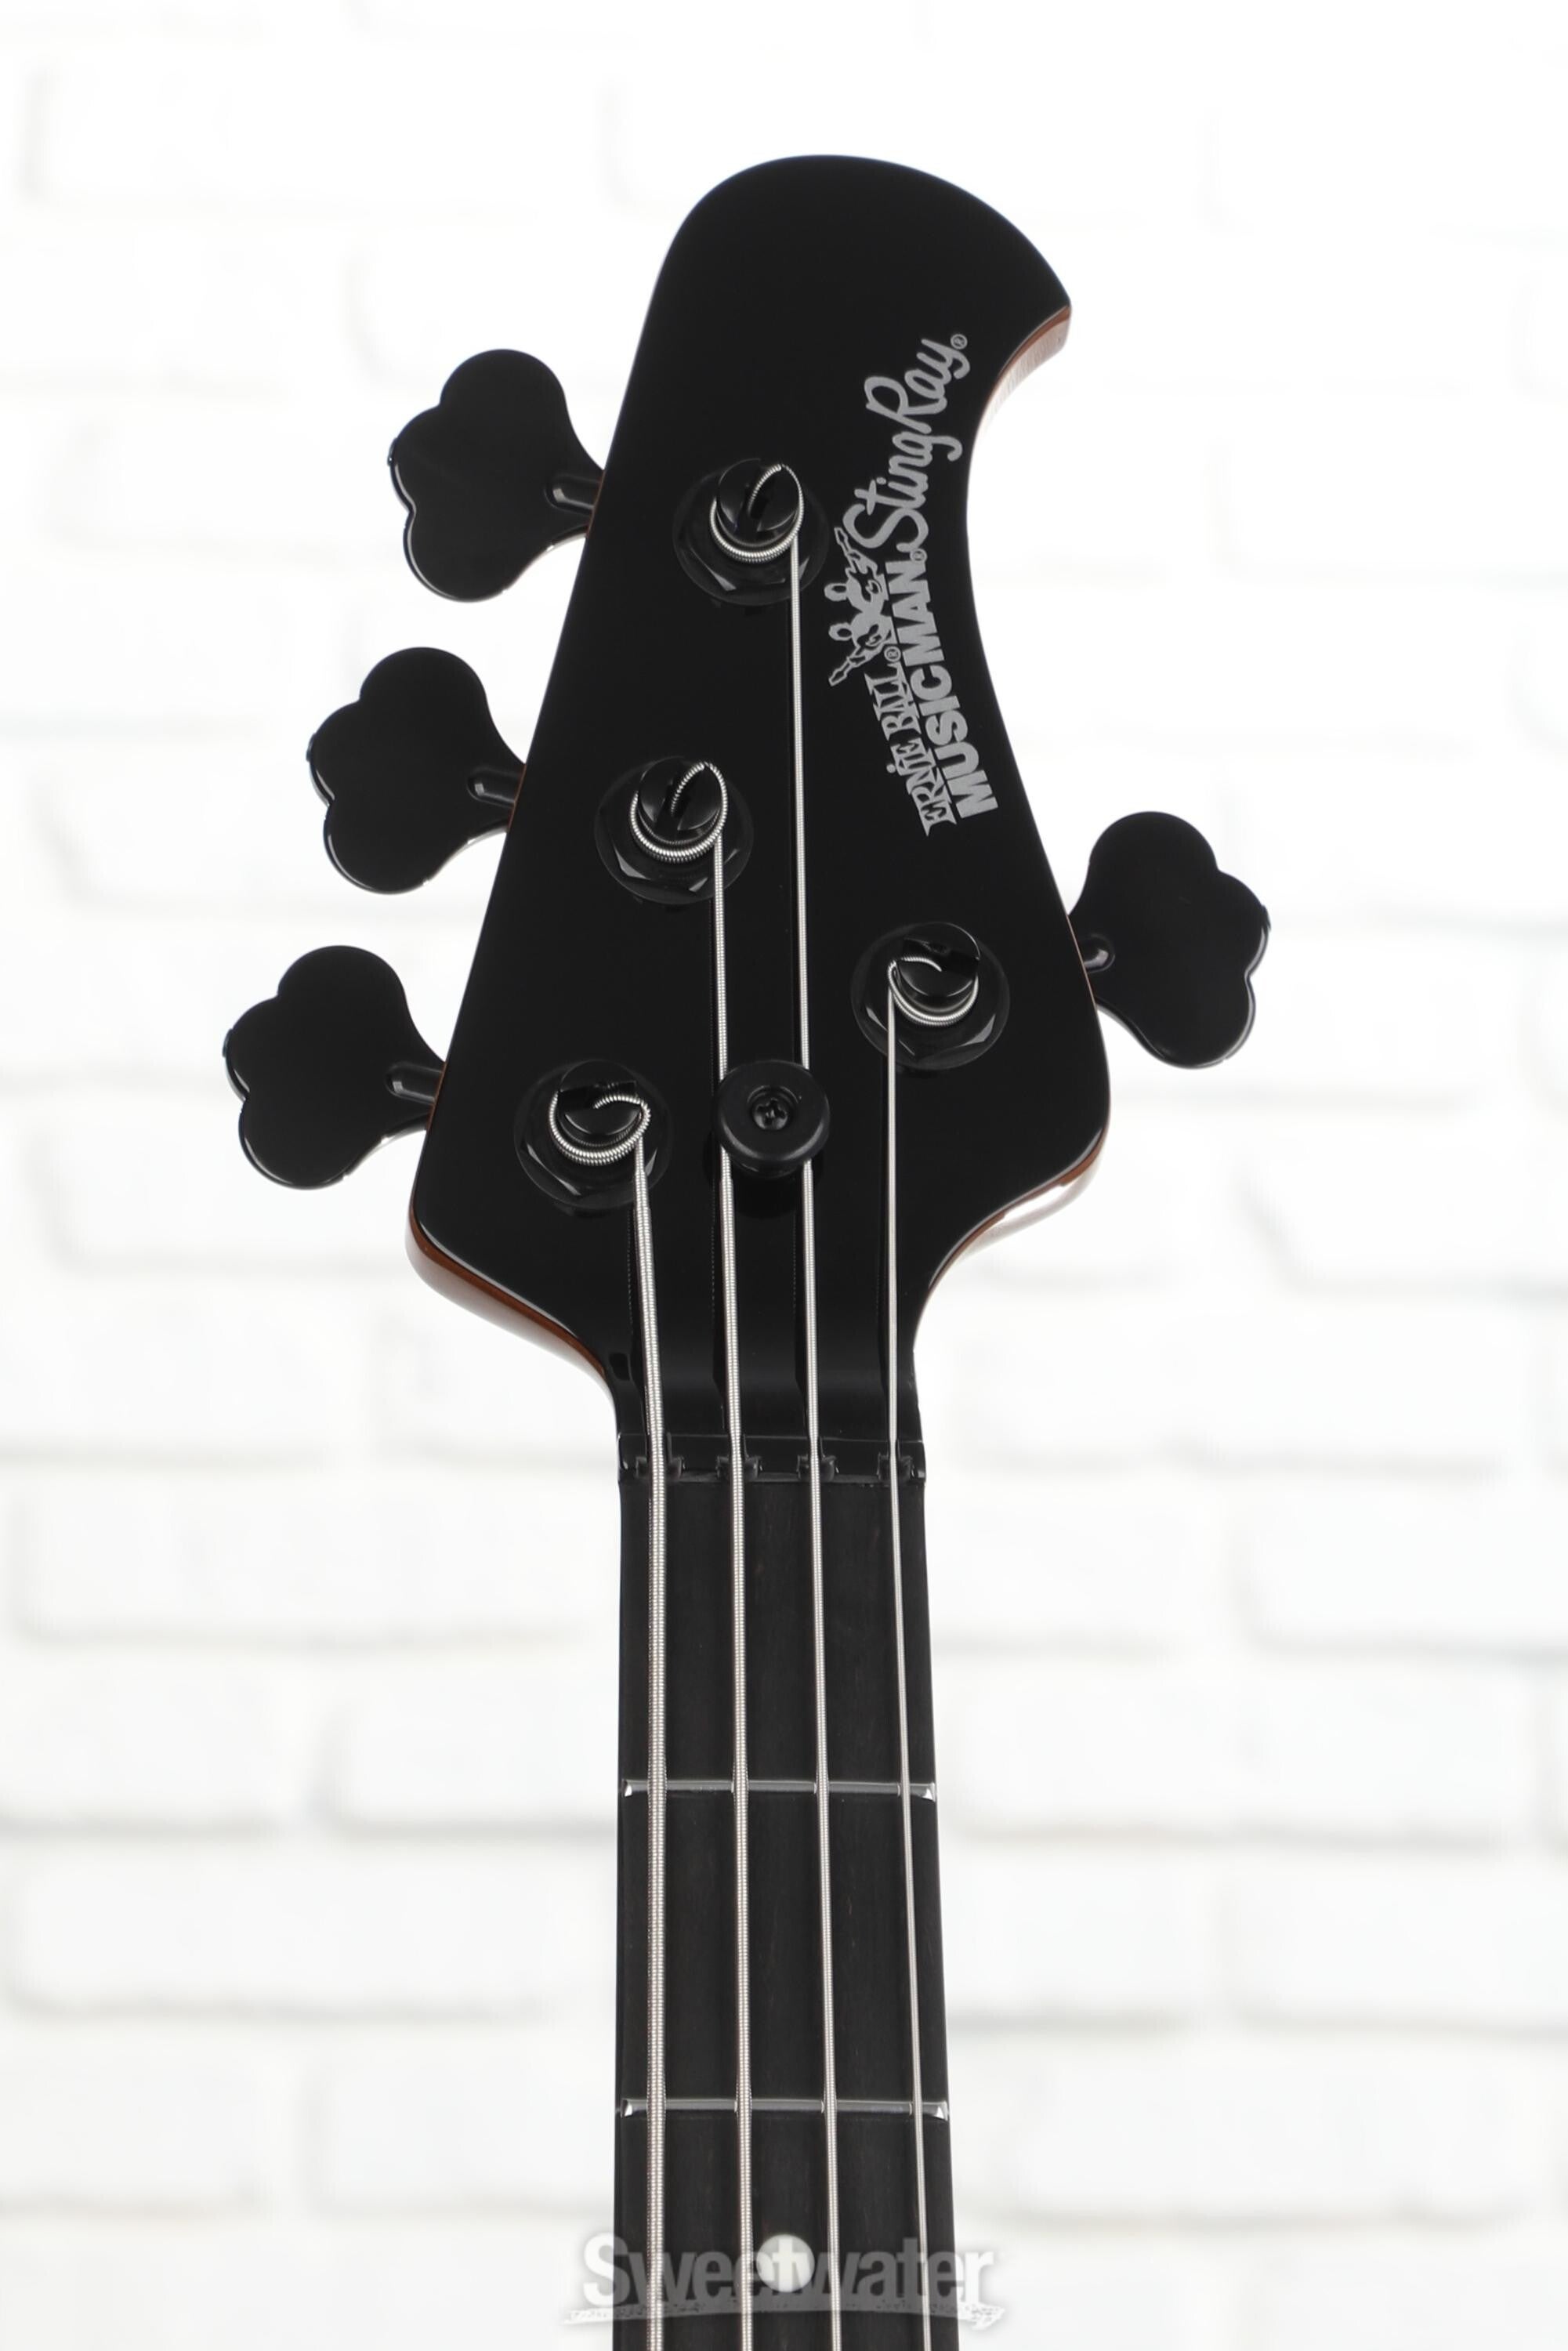 Ernie Ball Music Man StingRay Special Bass Guitar - Smoked Chrome with  Ebony Fingerboard